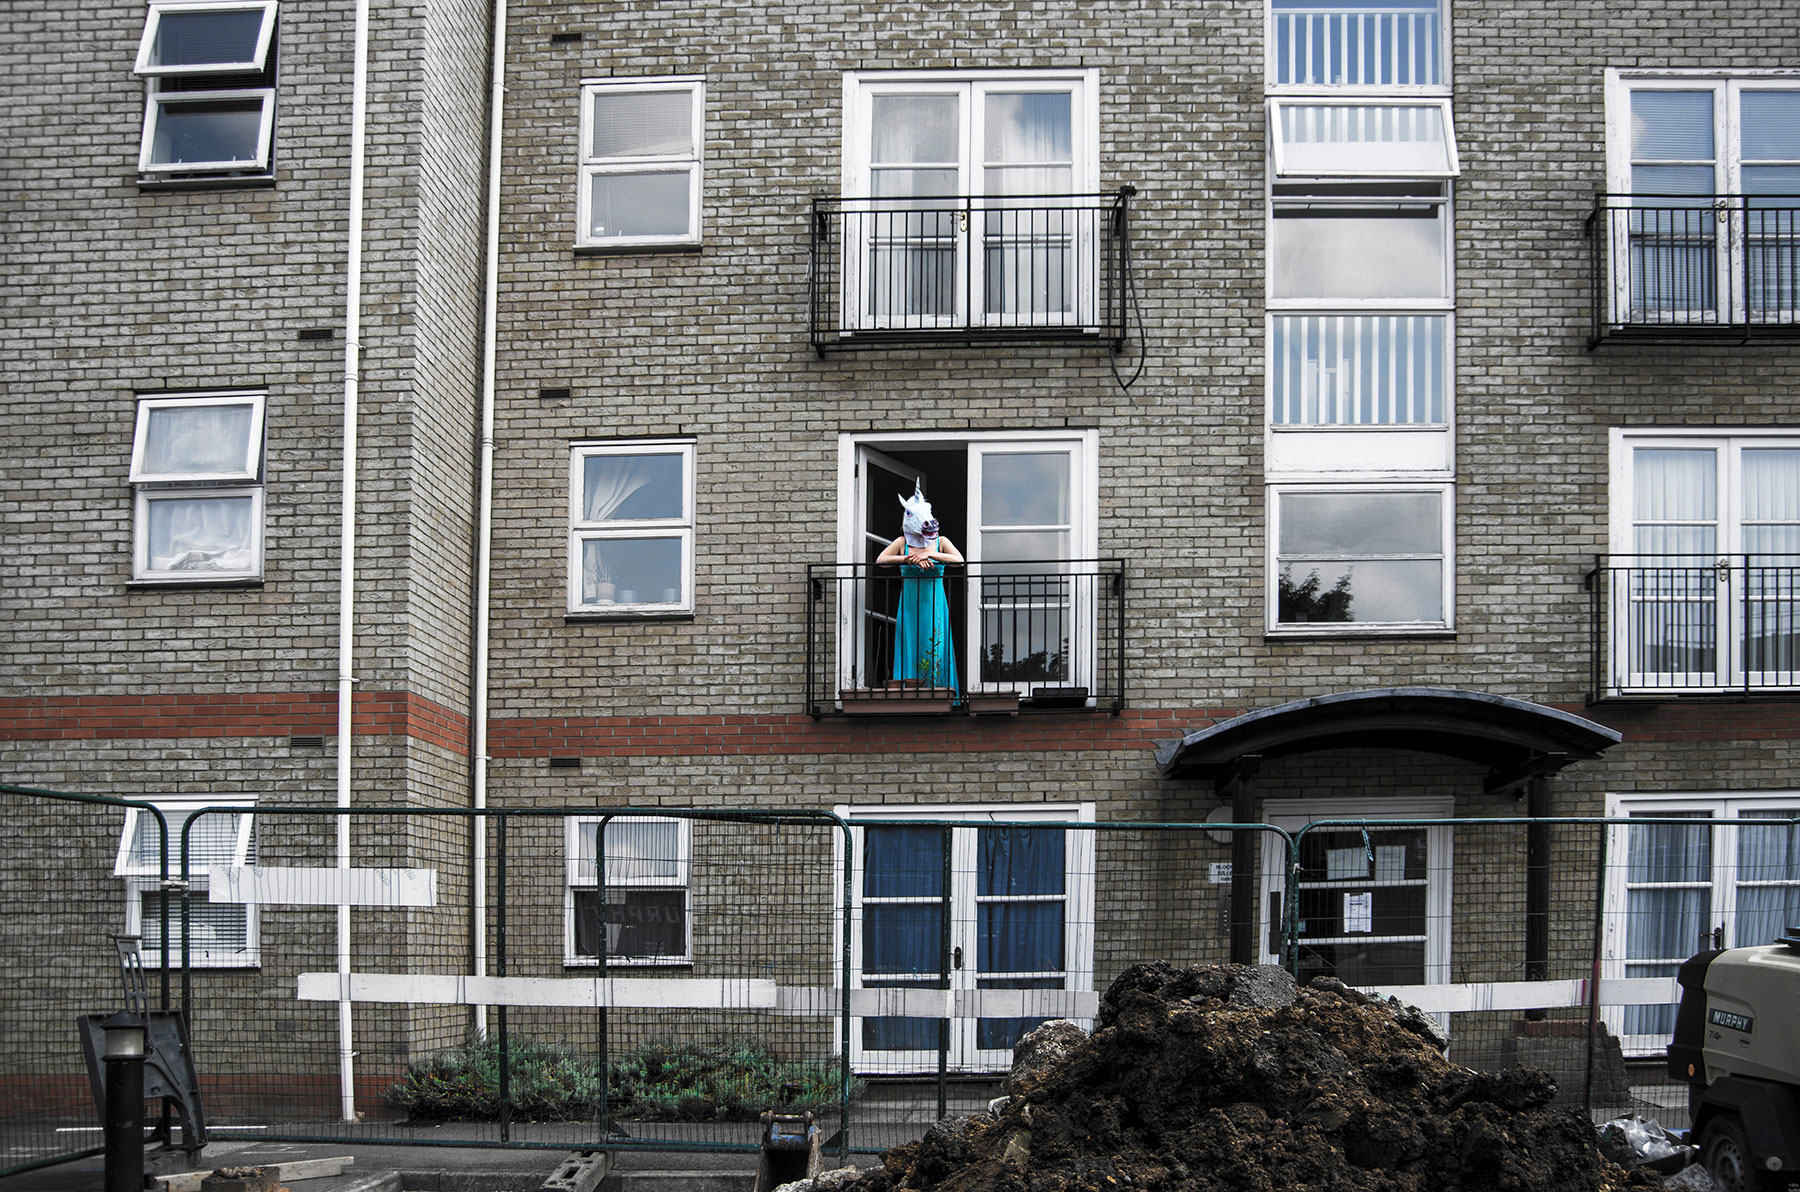 Beast - block of flats with person wearing unicorn mask on balcony